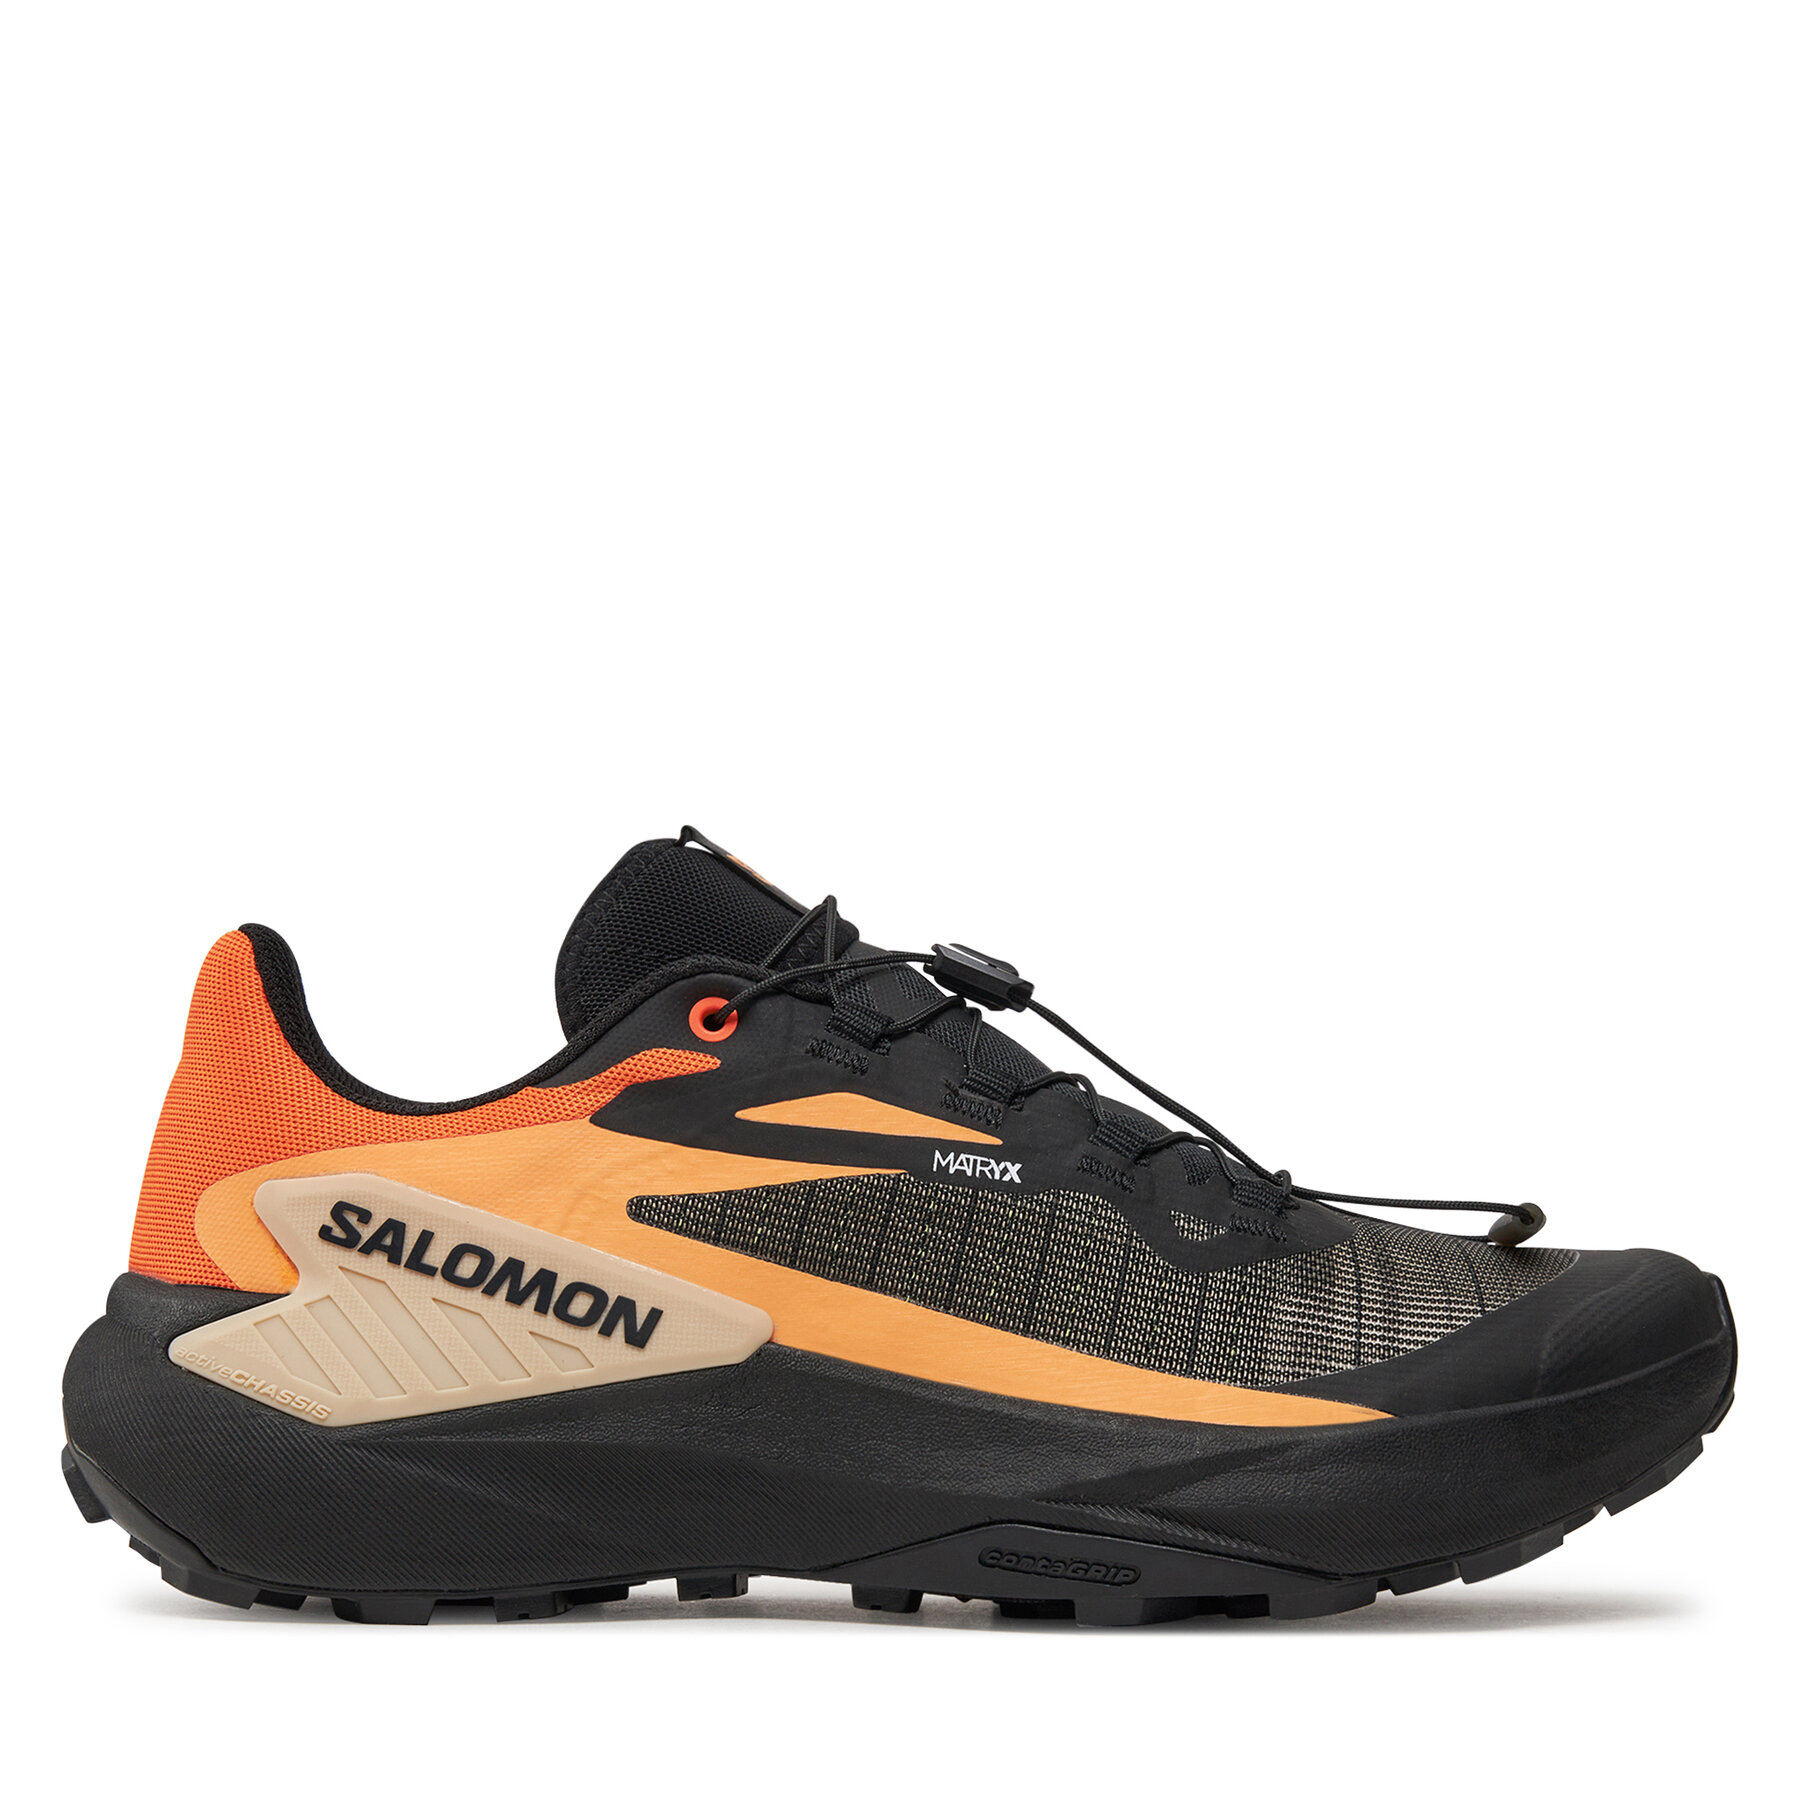 Schuhe Salomon Genesis L47526100 Dragon Fire / Black / Cement von Salomon